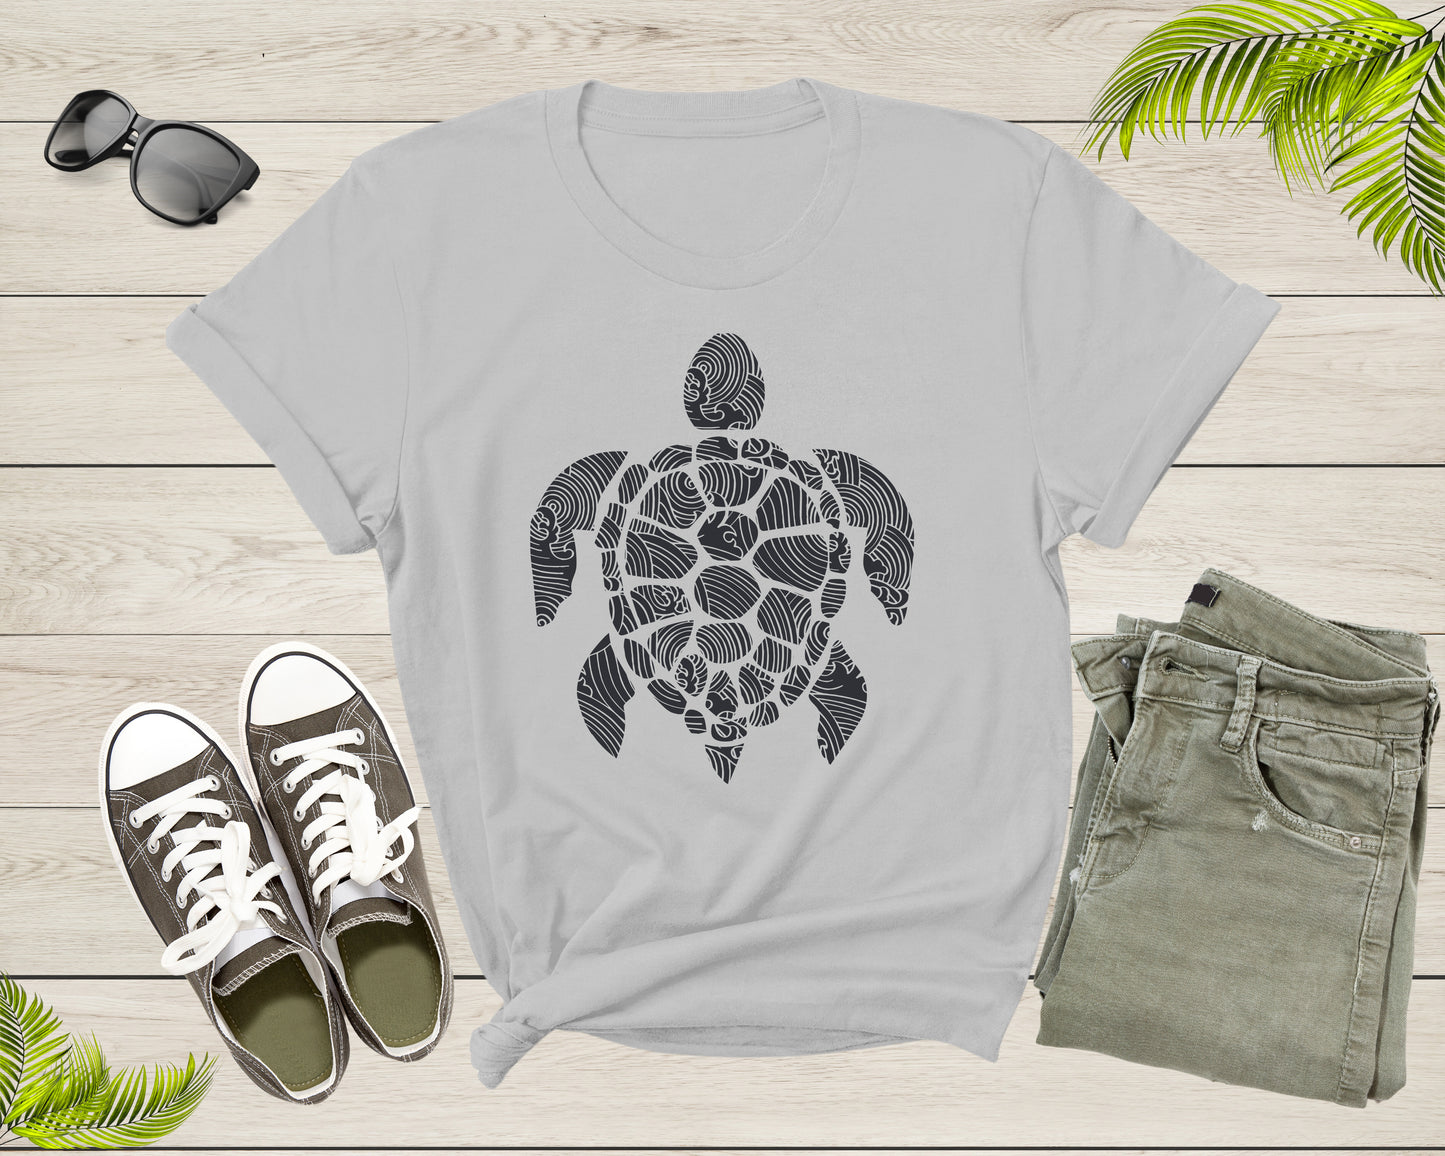 Cute Sea Turtle Lover Graphic Gift Present Men Women Kids T-Shirt Turtle Lover Gift T Shirt for Boys Girls Teens Graphic Design Tshirt